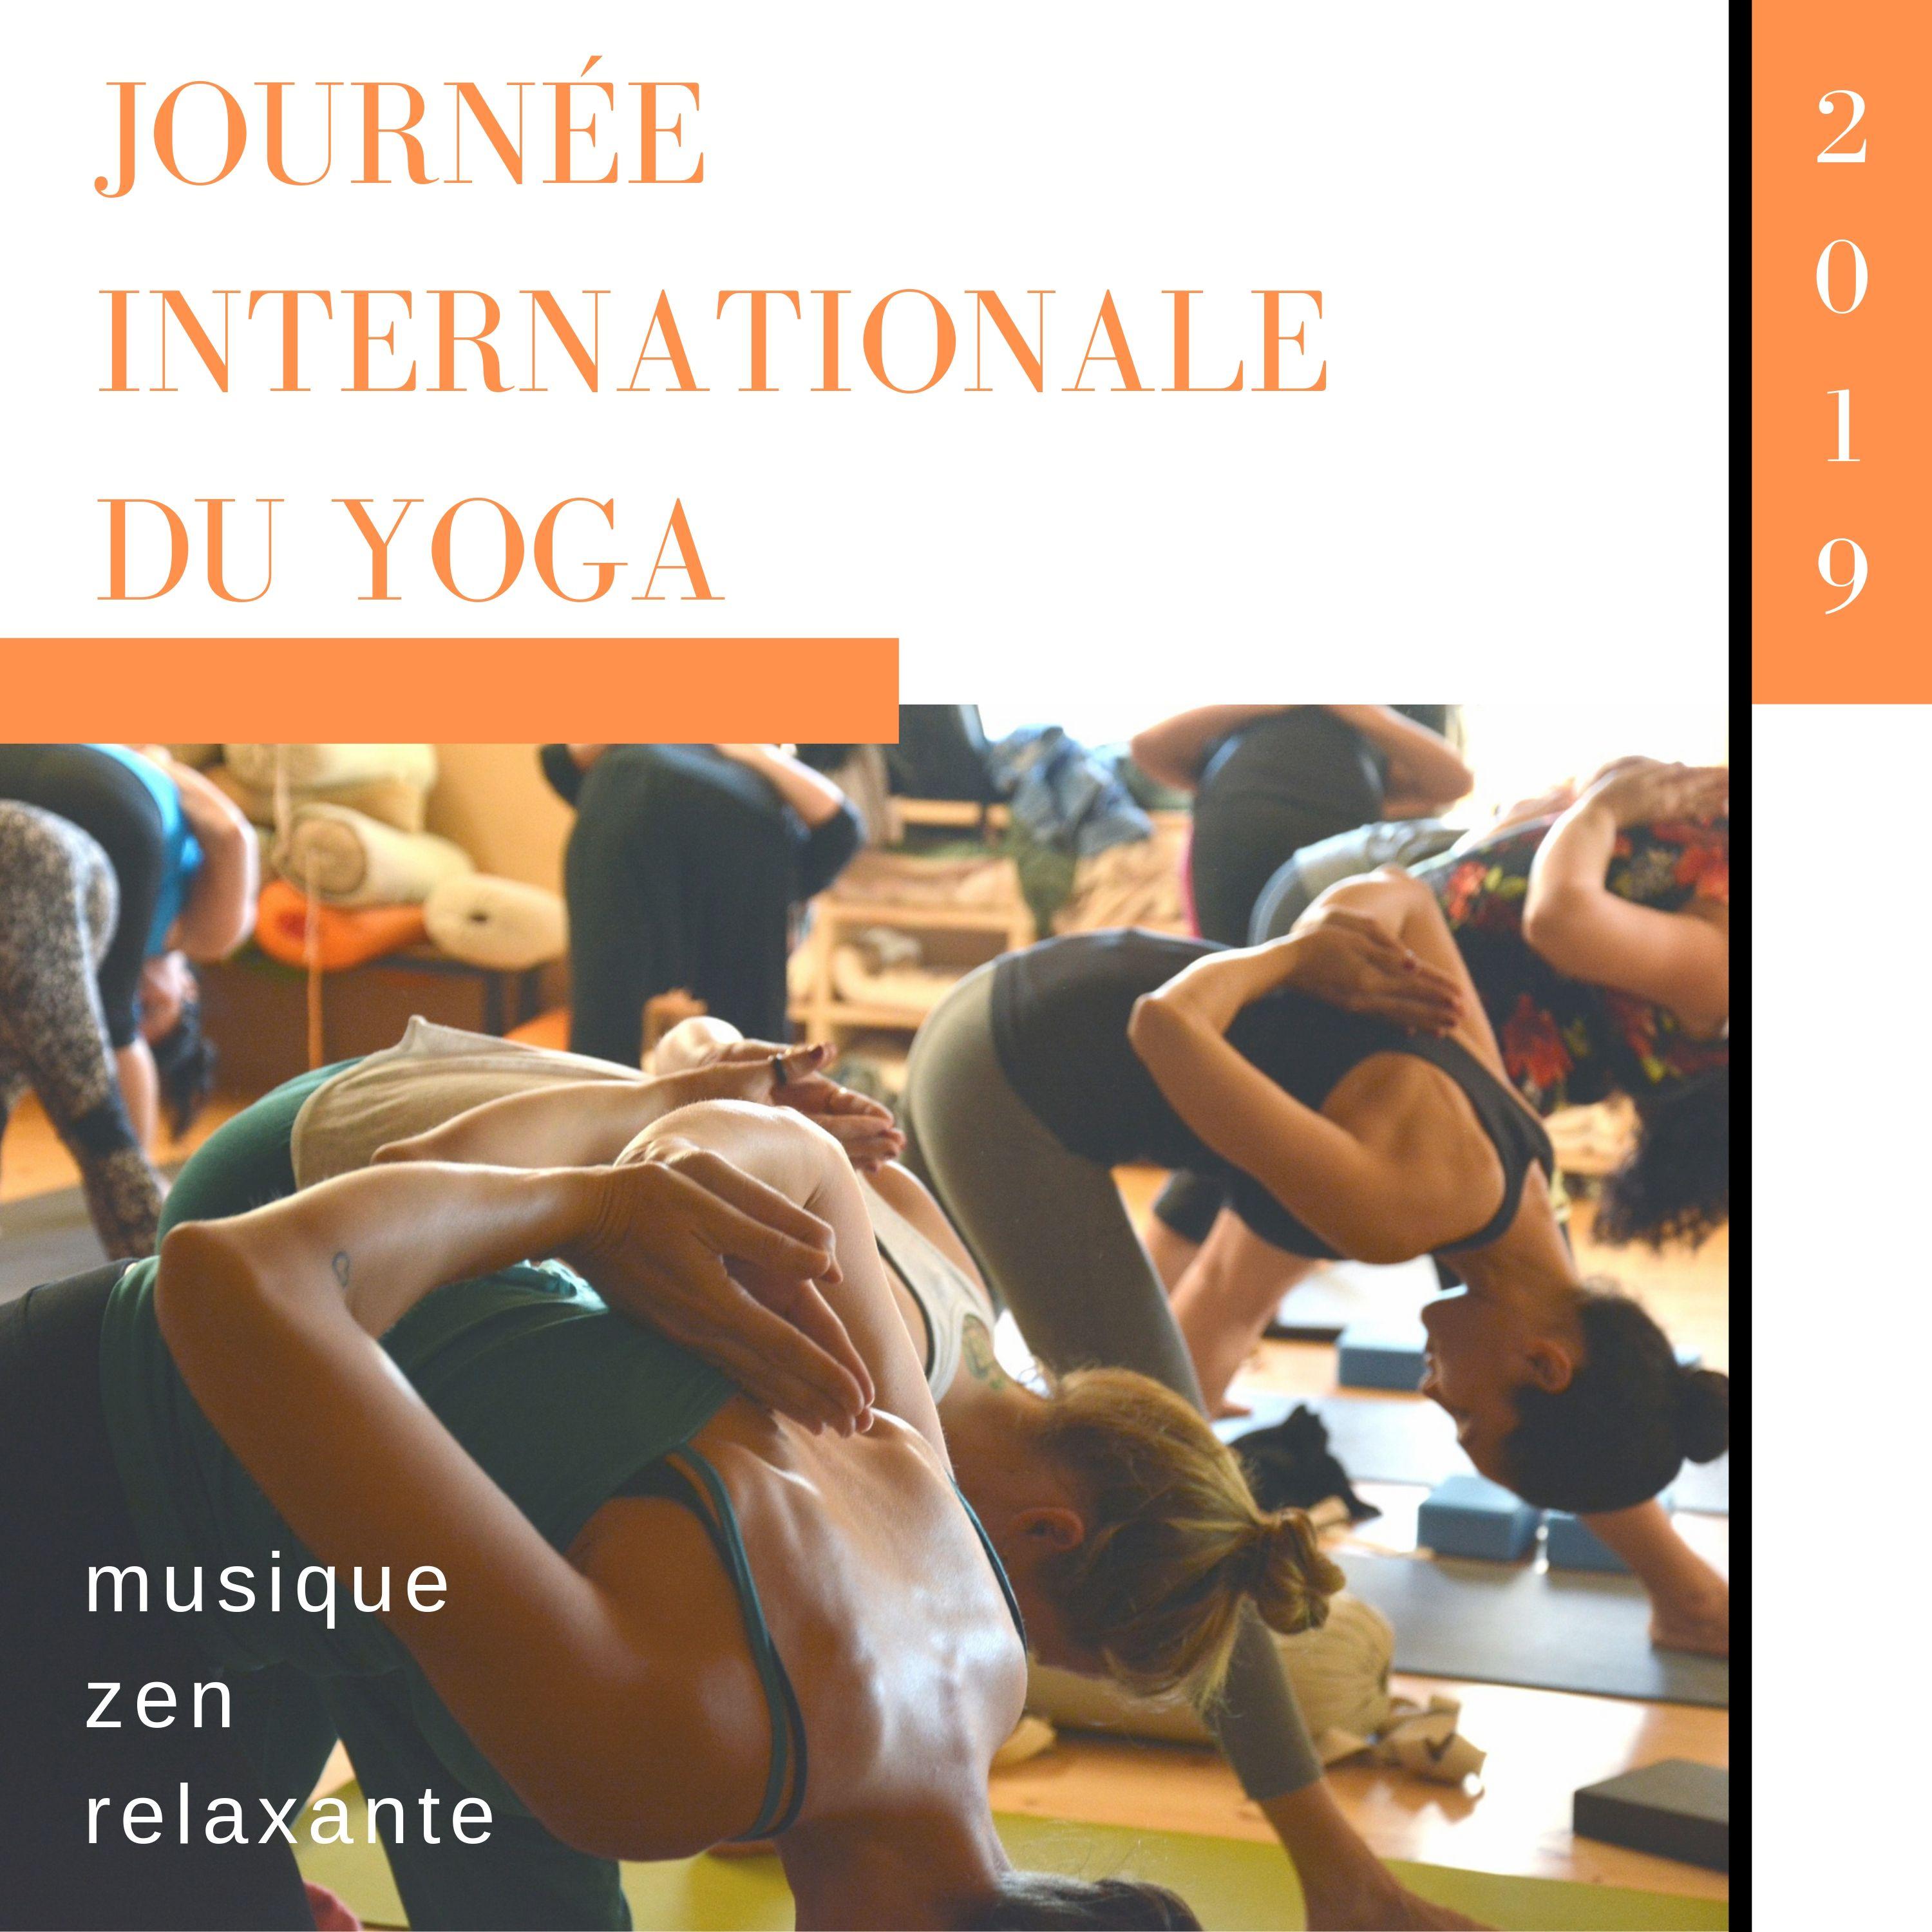 Journe e internationale du yoga 2019  musique zen relaxante